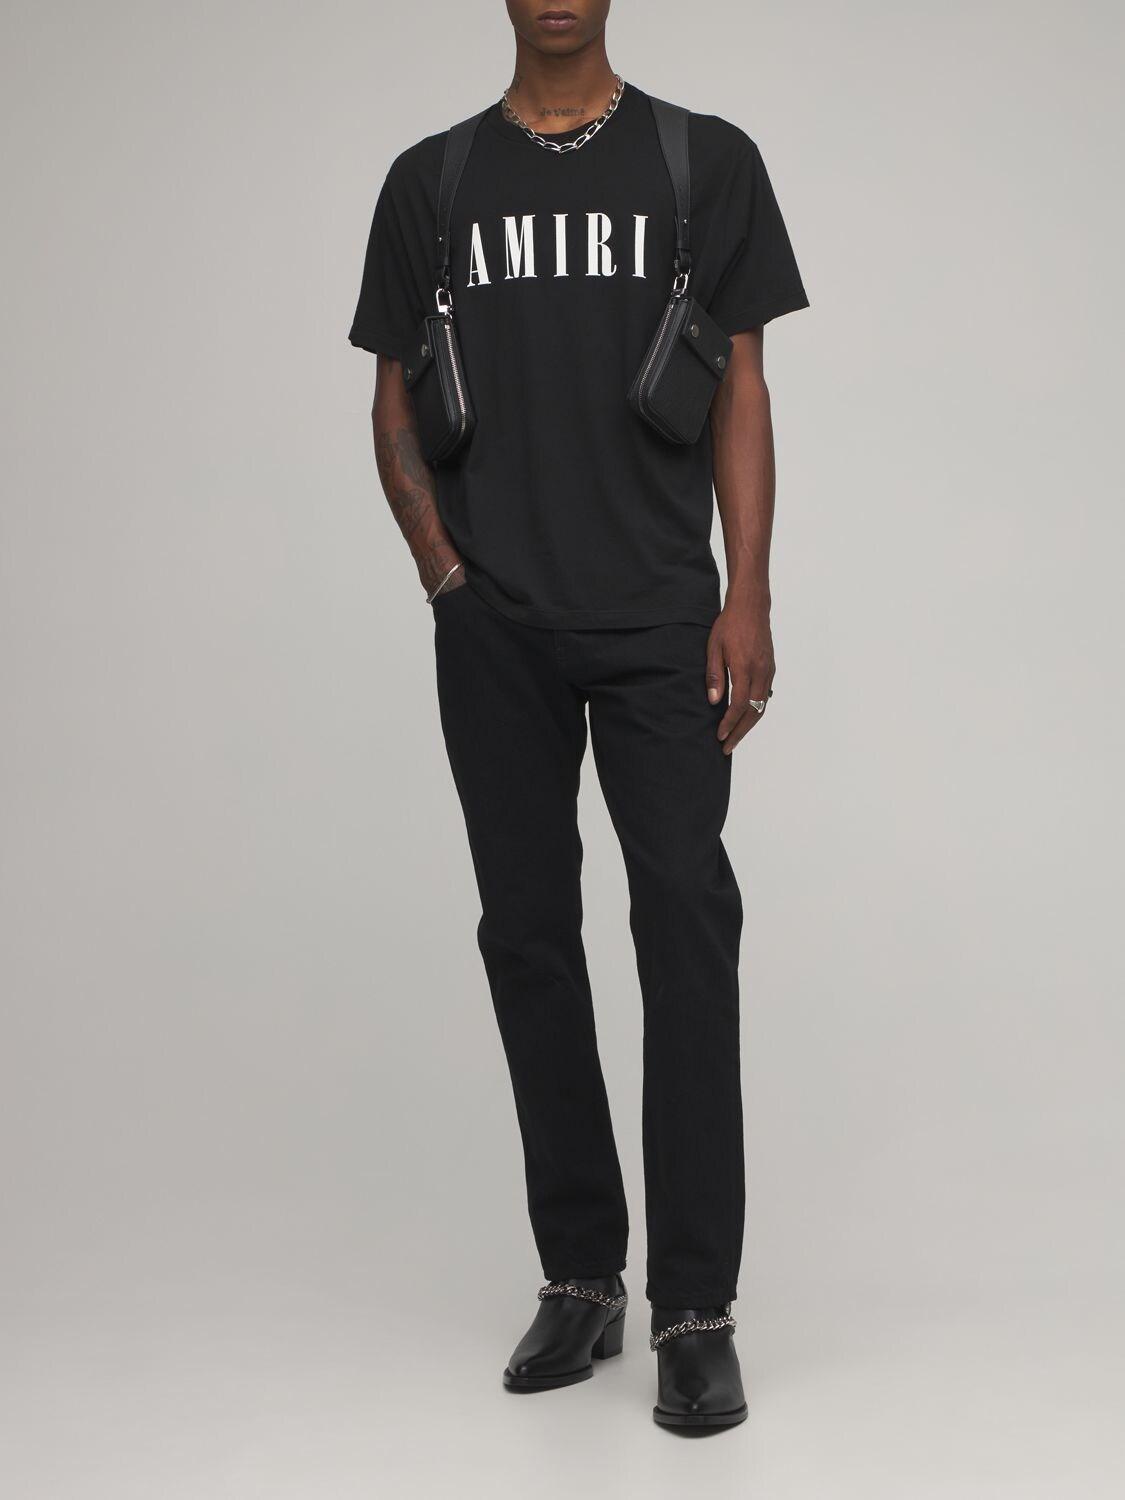 Amiri 2.0 Leather Harness Bag in Black for Men